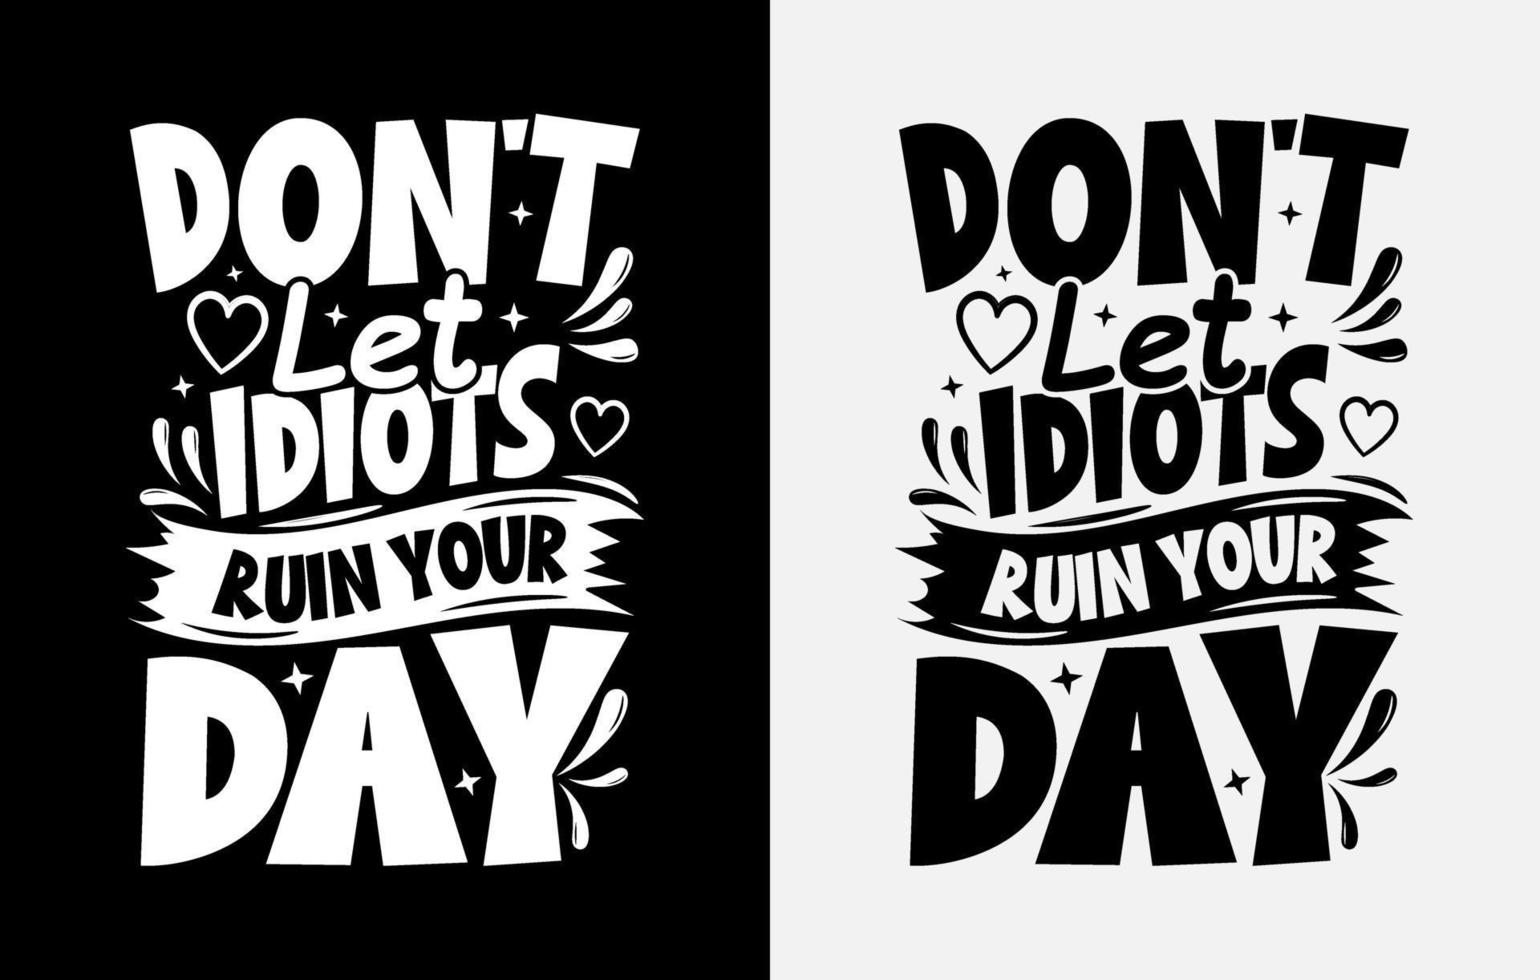 Letterings t shirt design, Motivational Saying T shirt Design, typography t shirt design vector